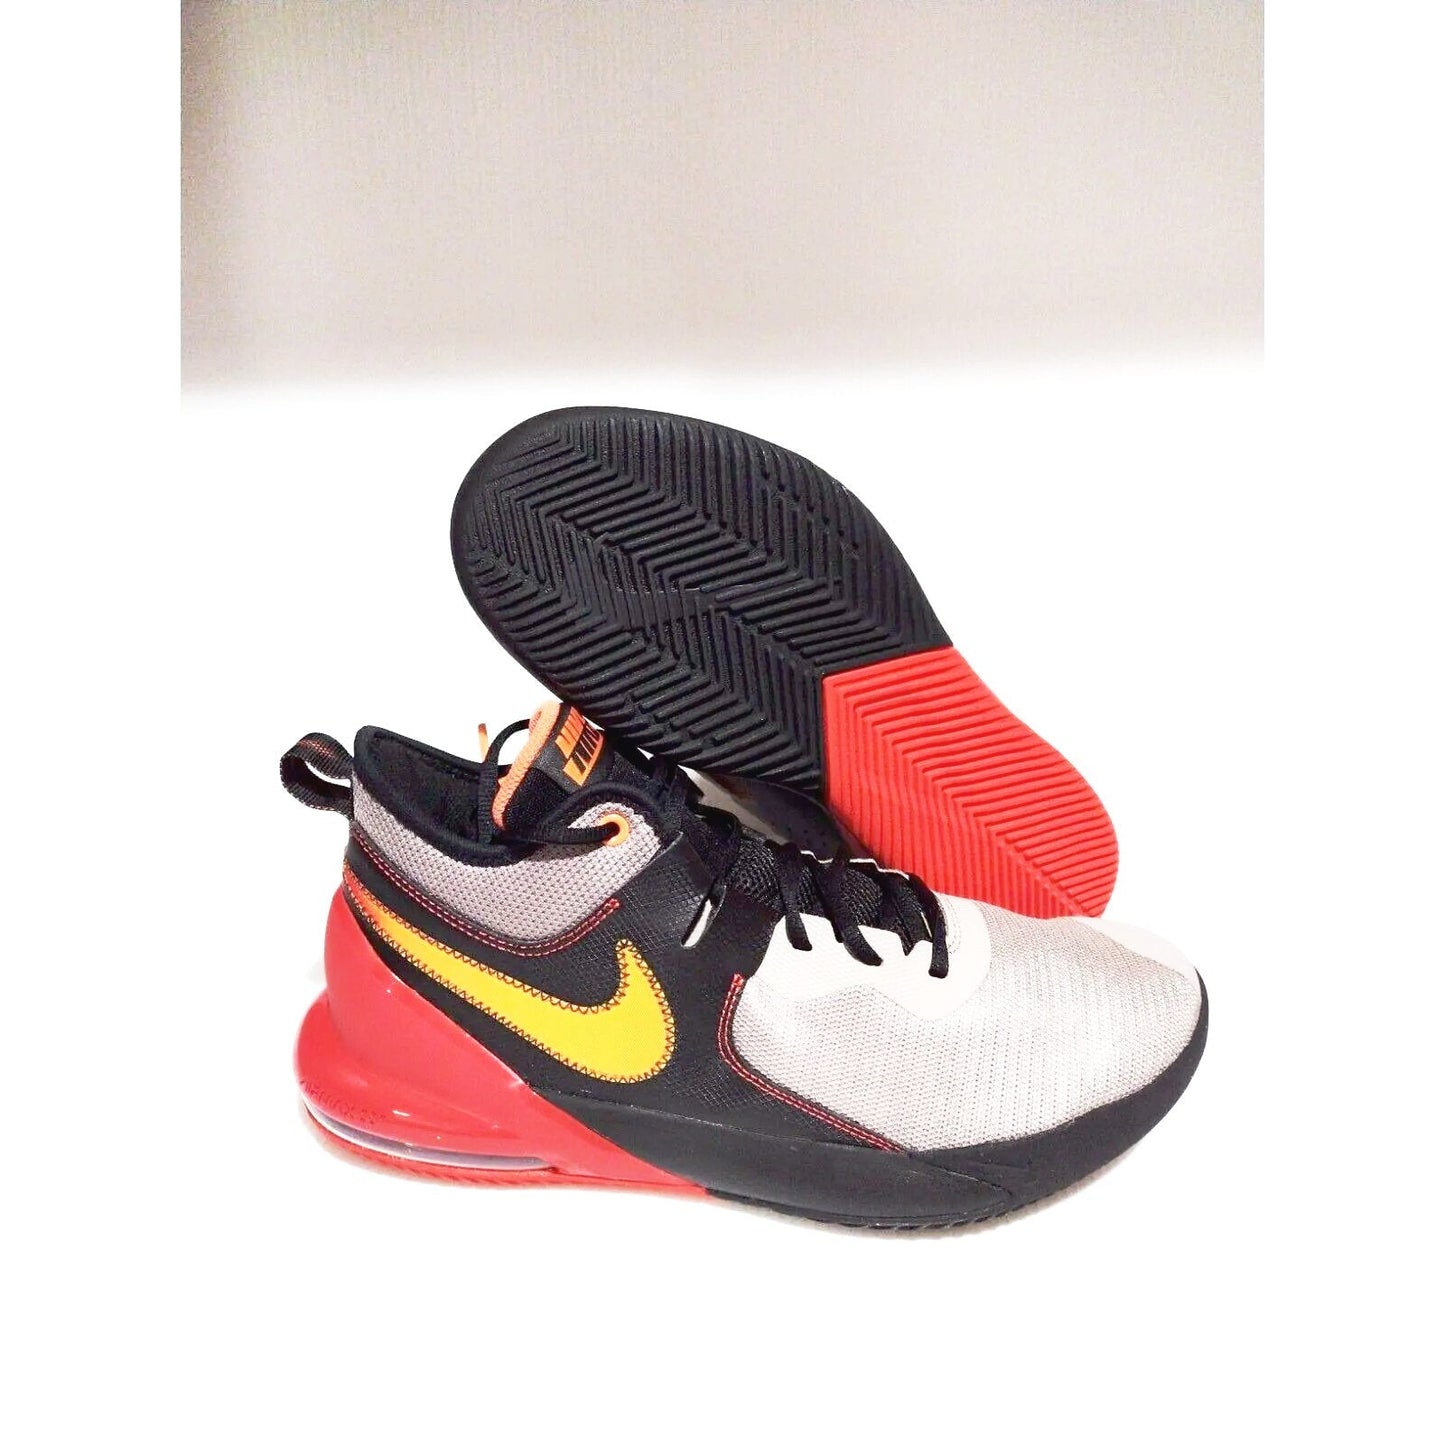 Nike air max impact basketball shoes size 11 us men - Classic Fashion Deals